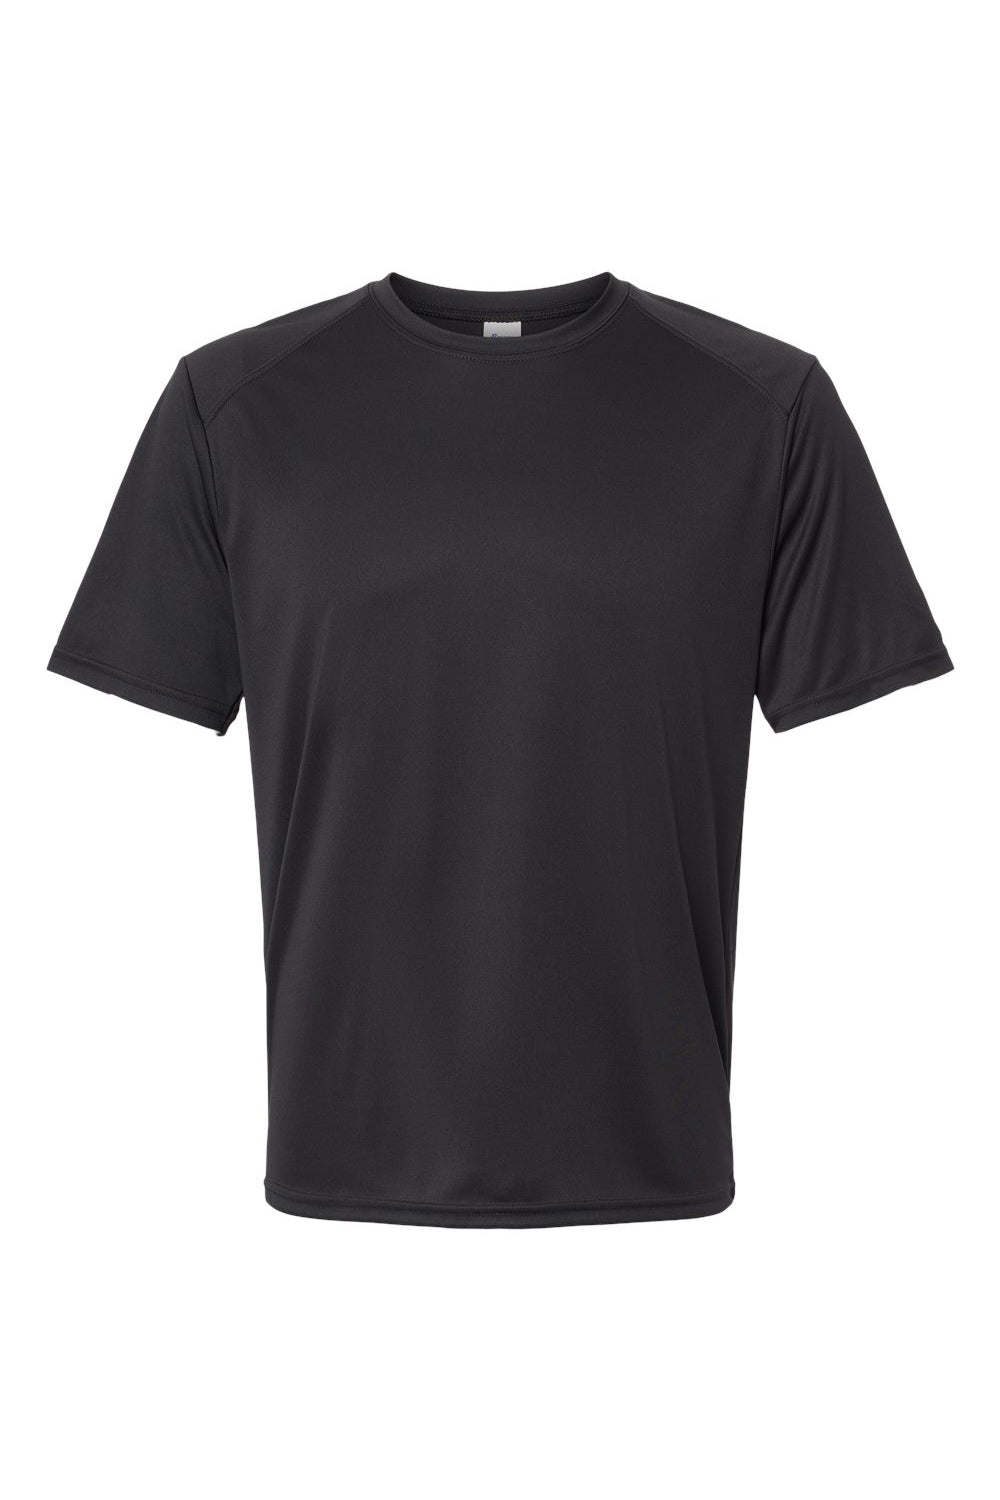 Paragon 200 Mens Islander Performance Short Sleeve Crewneck T-Shirt Black Flat Front